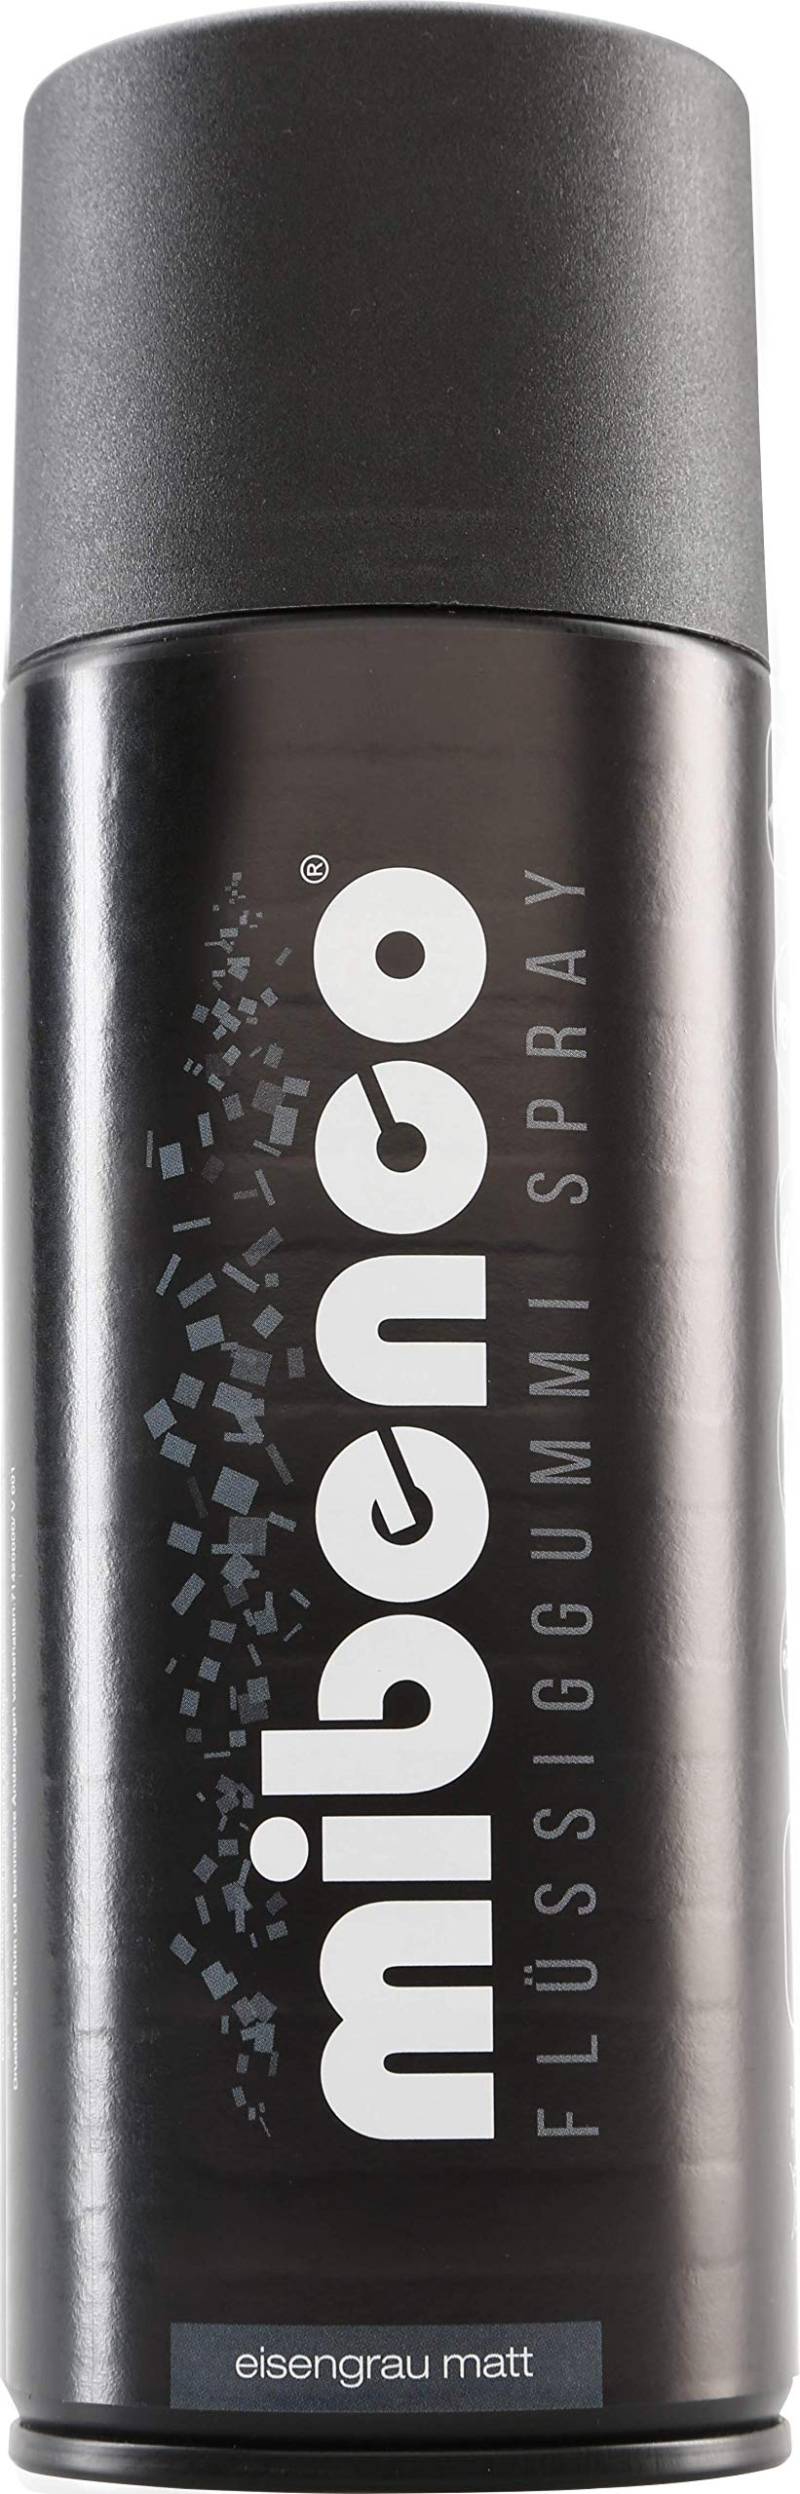 Mibenco Flüssiggummi Spray / Sprühfolie Eisengrau Matt 400 ml von mibenco